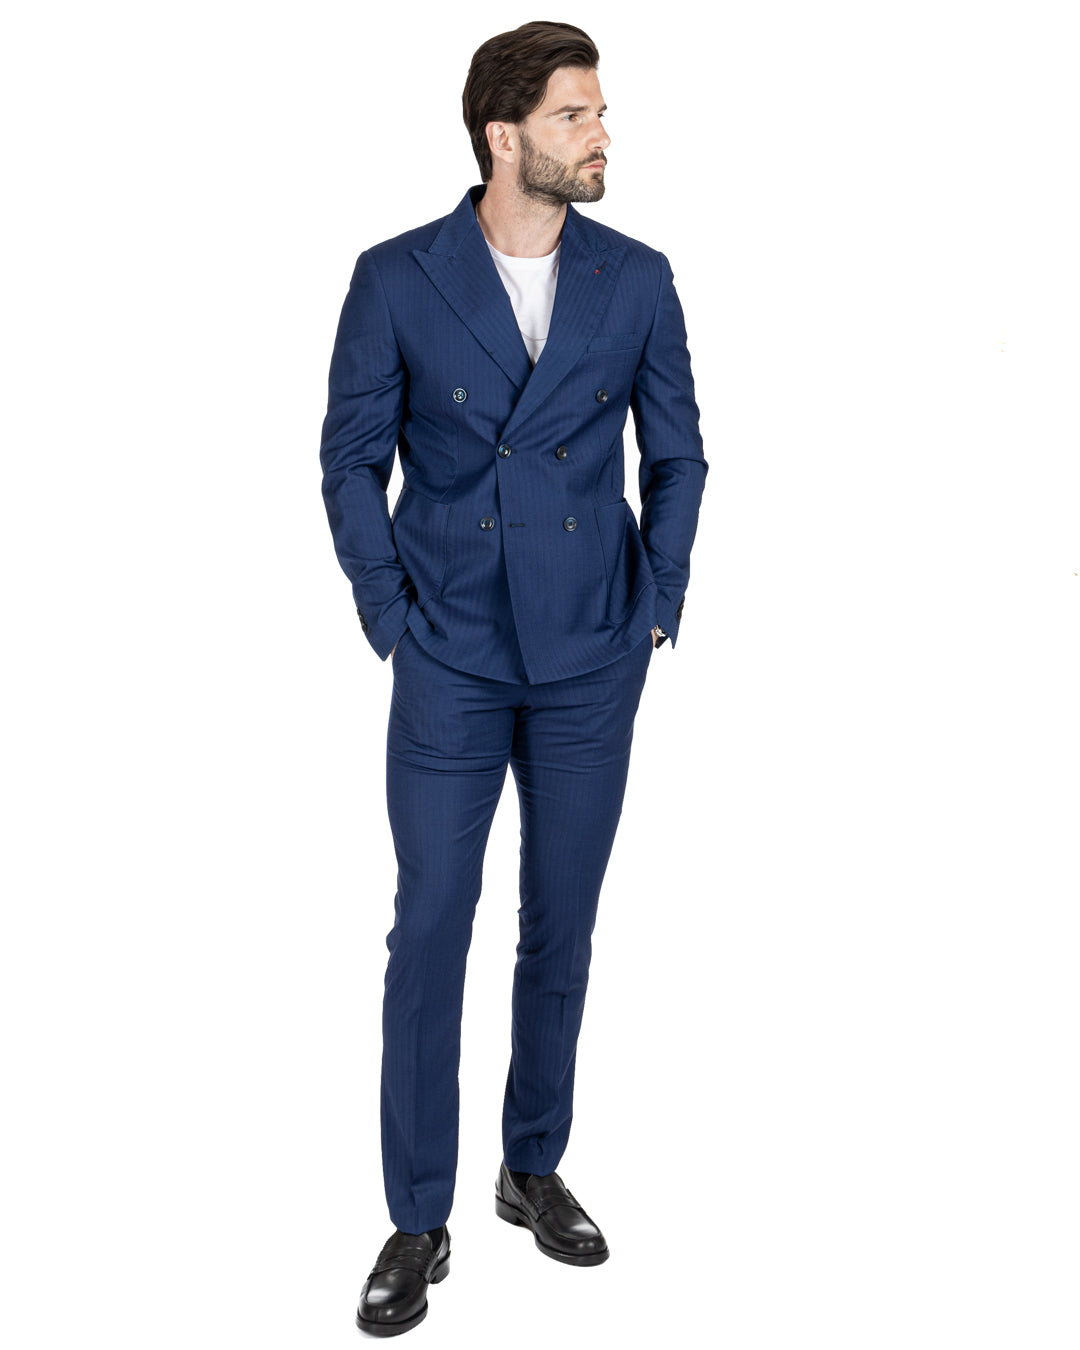 Marseille - bluette solaro double-breasted suit